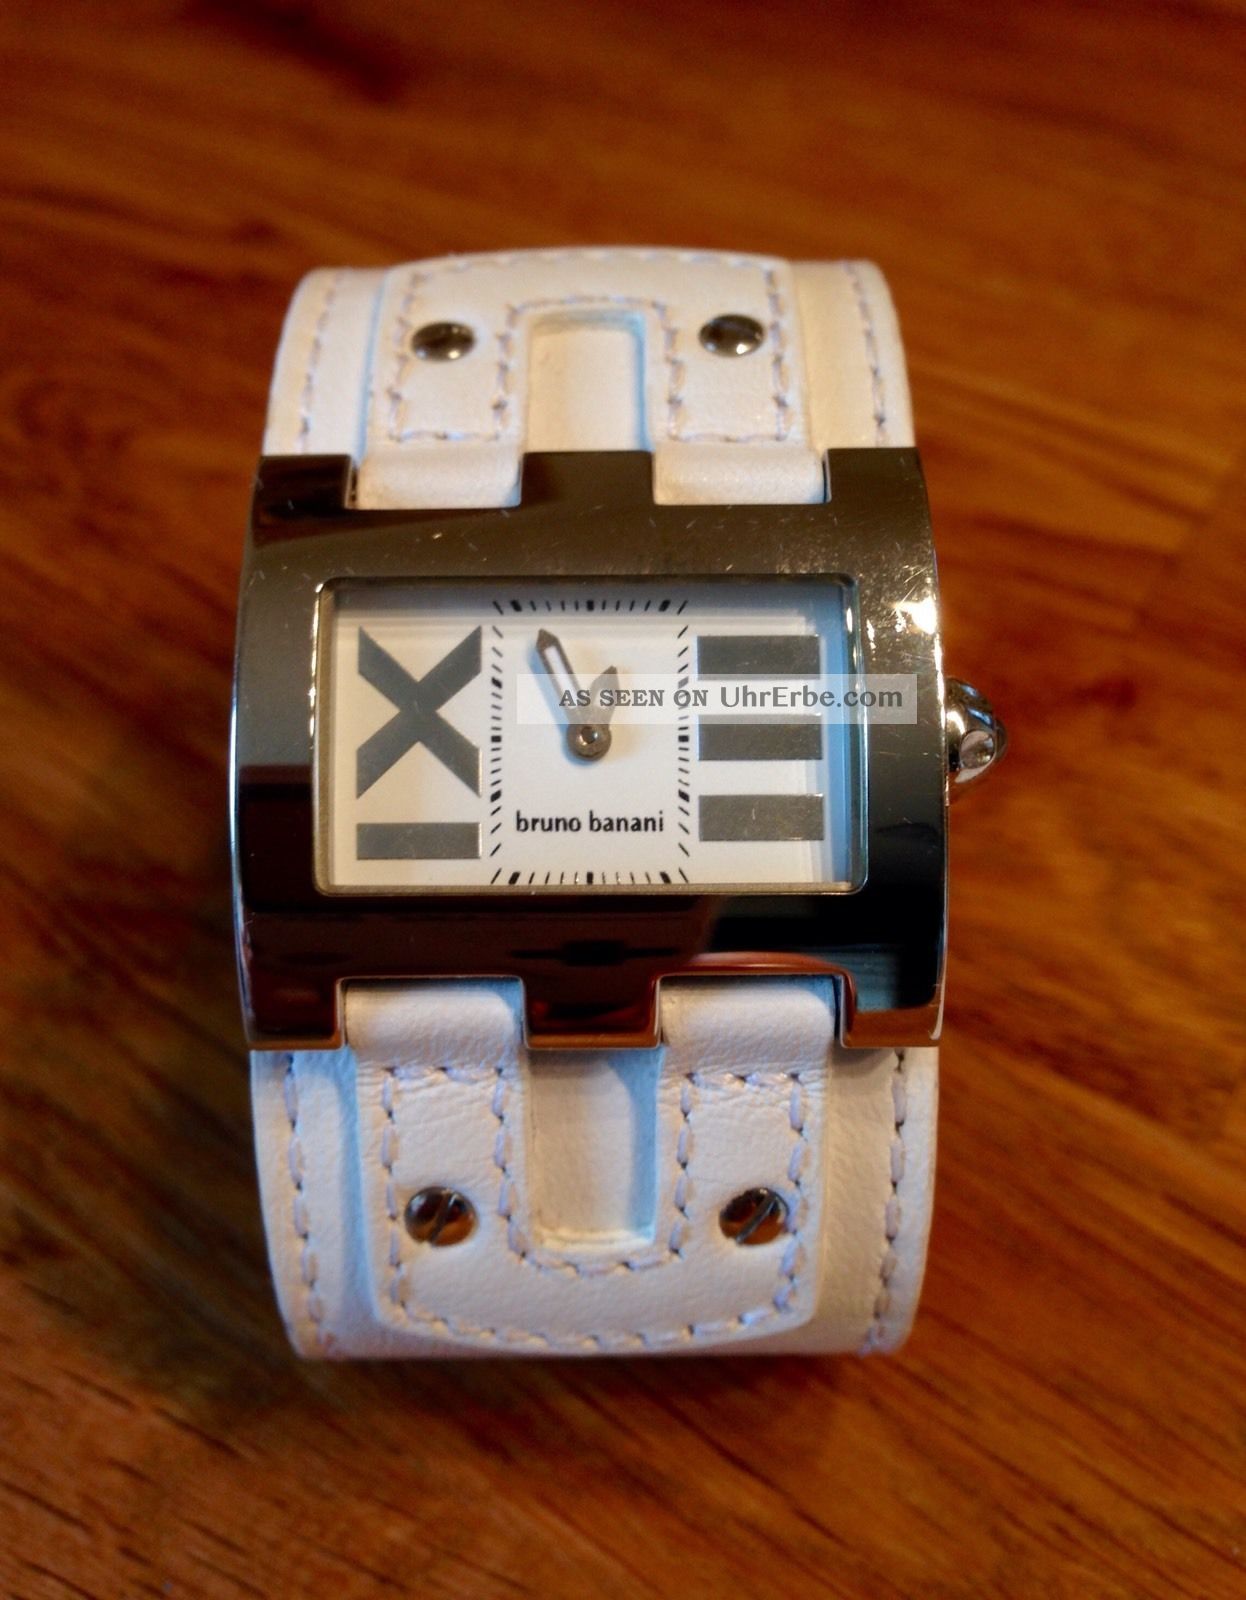 Bruno Banani Uhr Leder Weiss Armbanduhr - Wie,  Swarovski Beutel Armbanduhren Bild